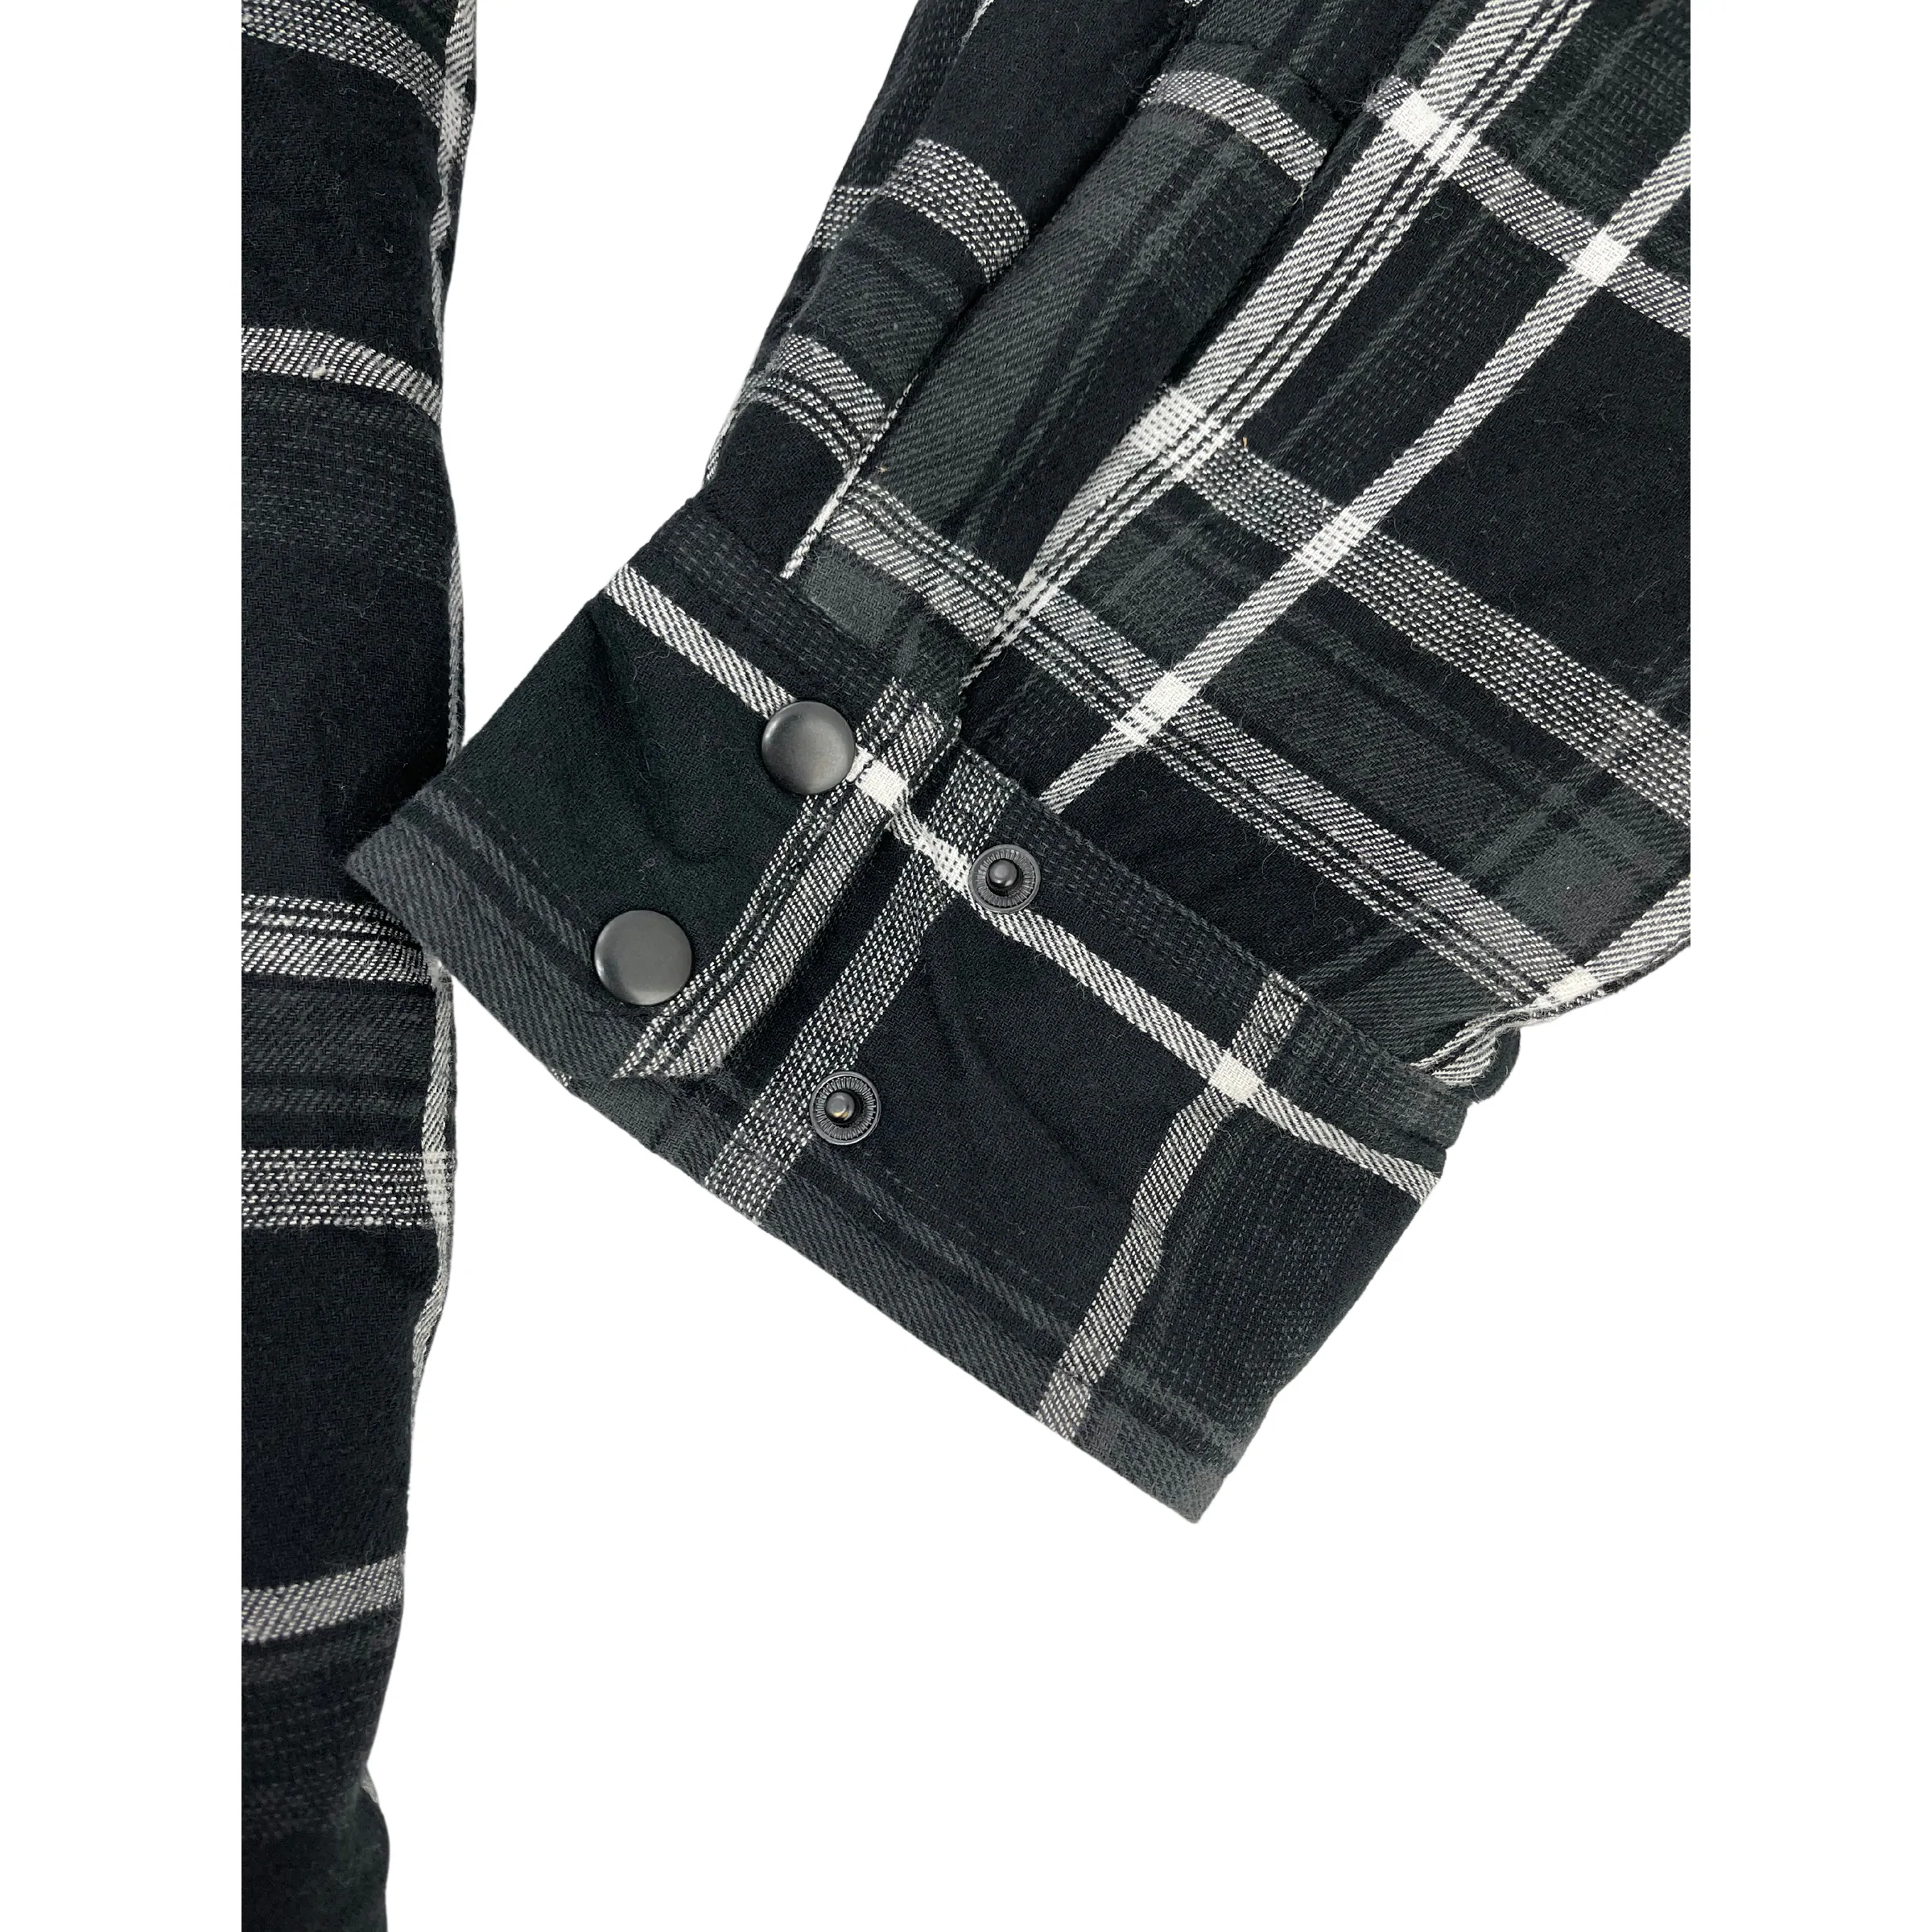 BC Clothing Men's Plaid Jacket / Black & Grey Plaid / Size XXLarge **No Tags**